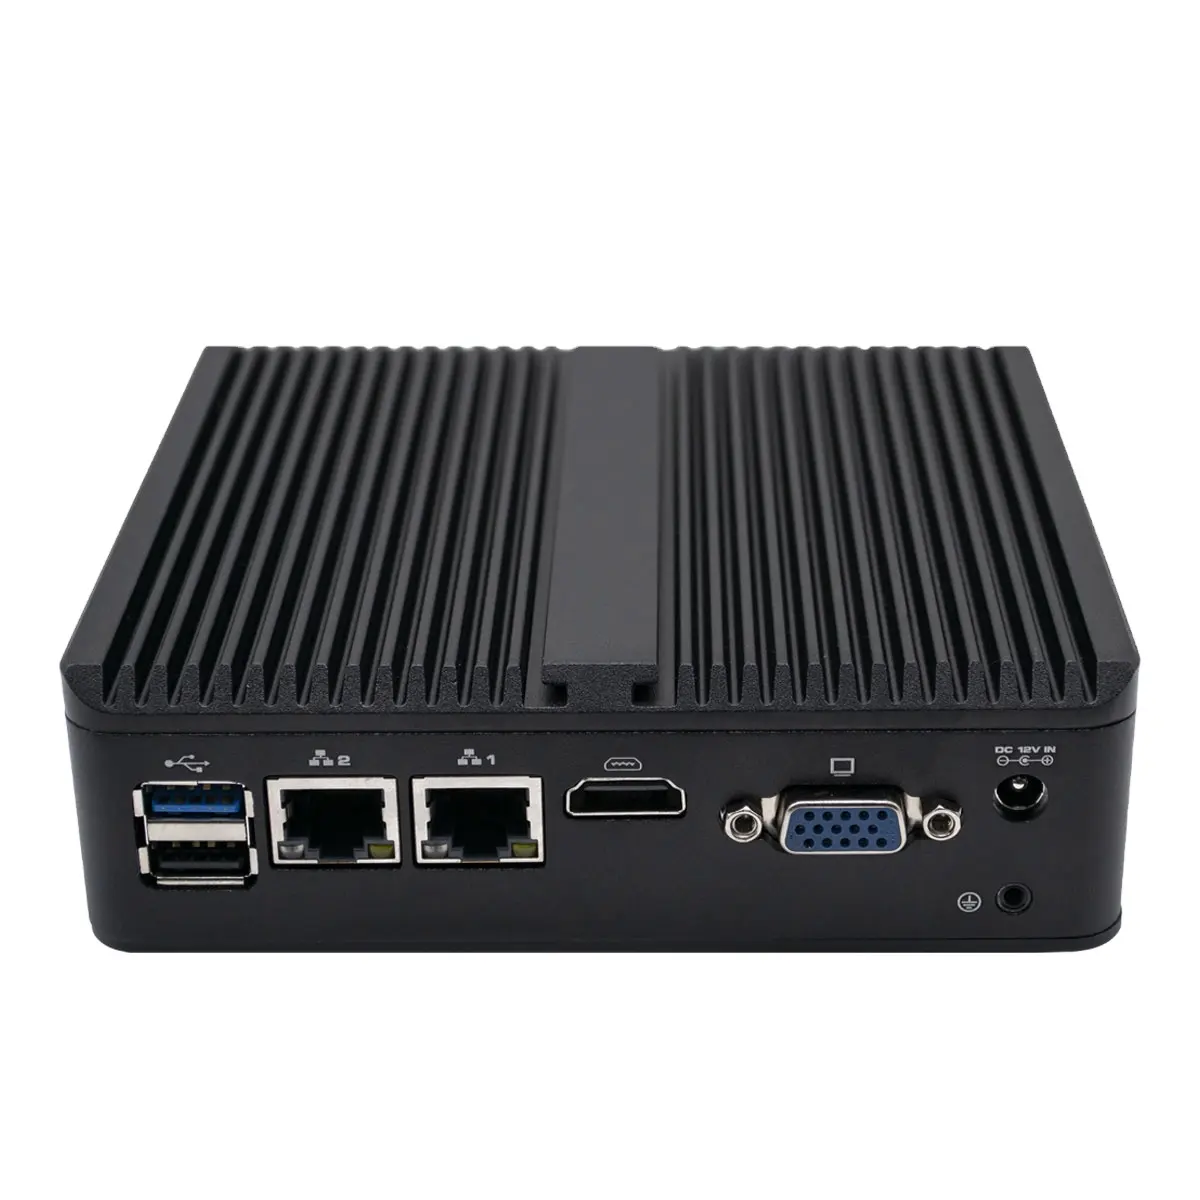 Hvaeipc Industriële Mini Pc J1900 Quad Core Fanless X86 Embedded Computer Dual Lan Rs232 Wifi 3G 4G Netwerkondersteuning